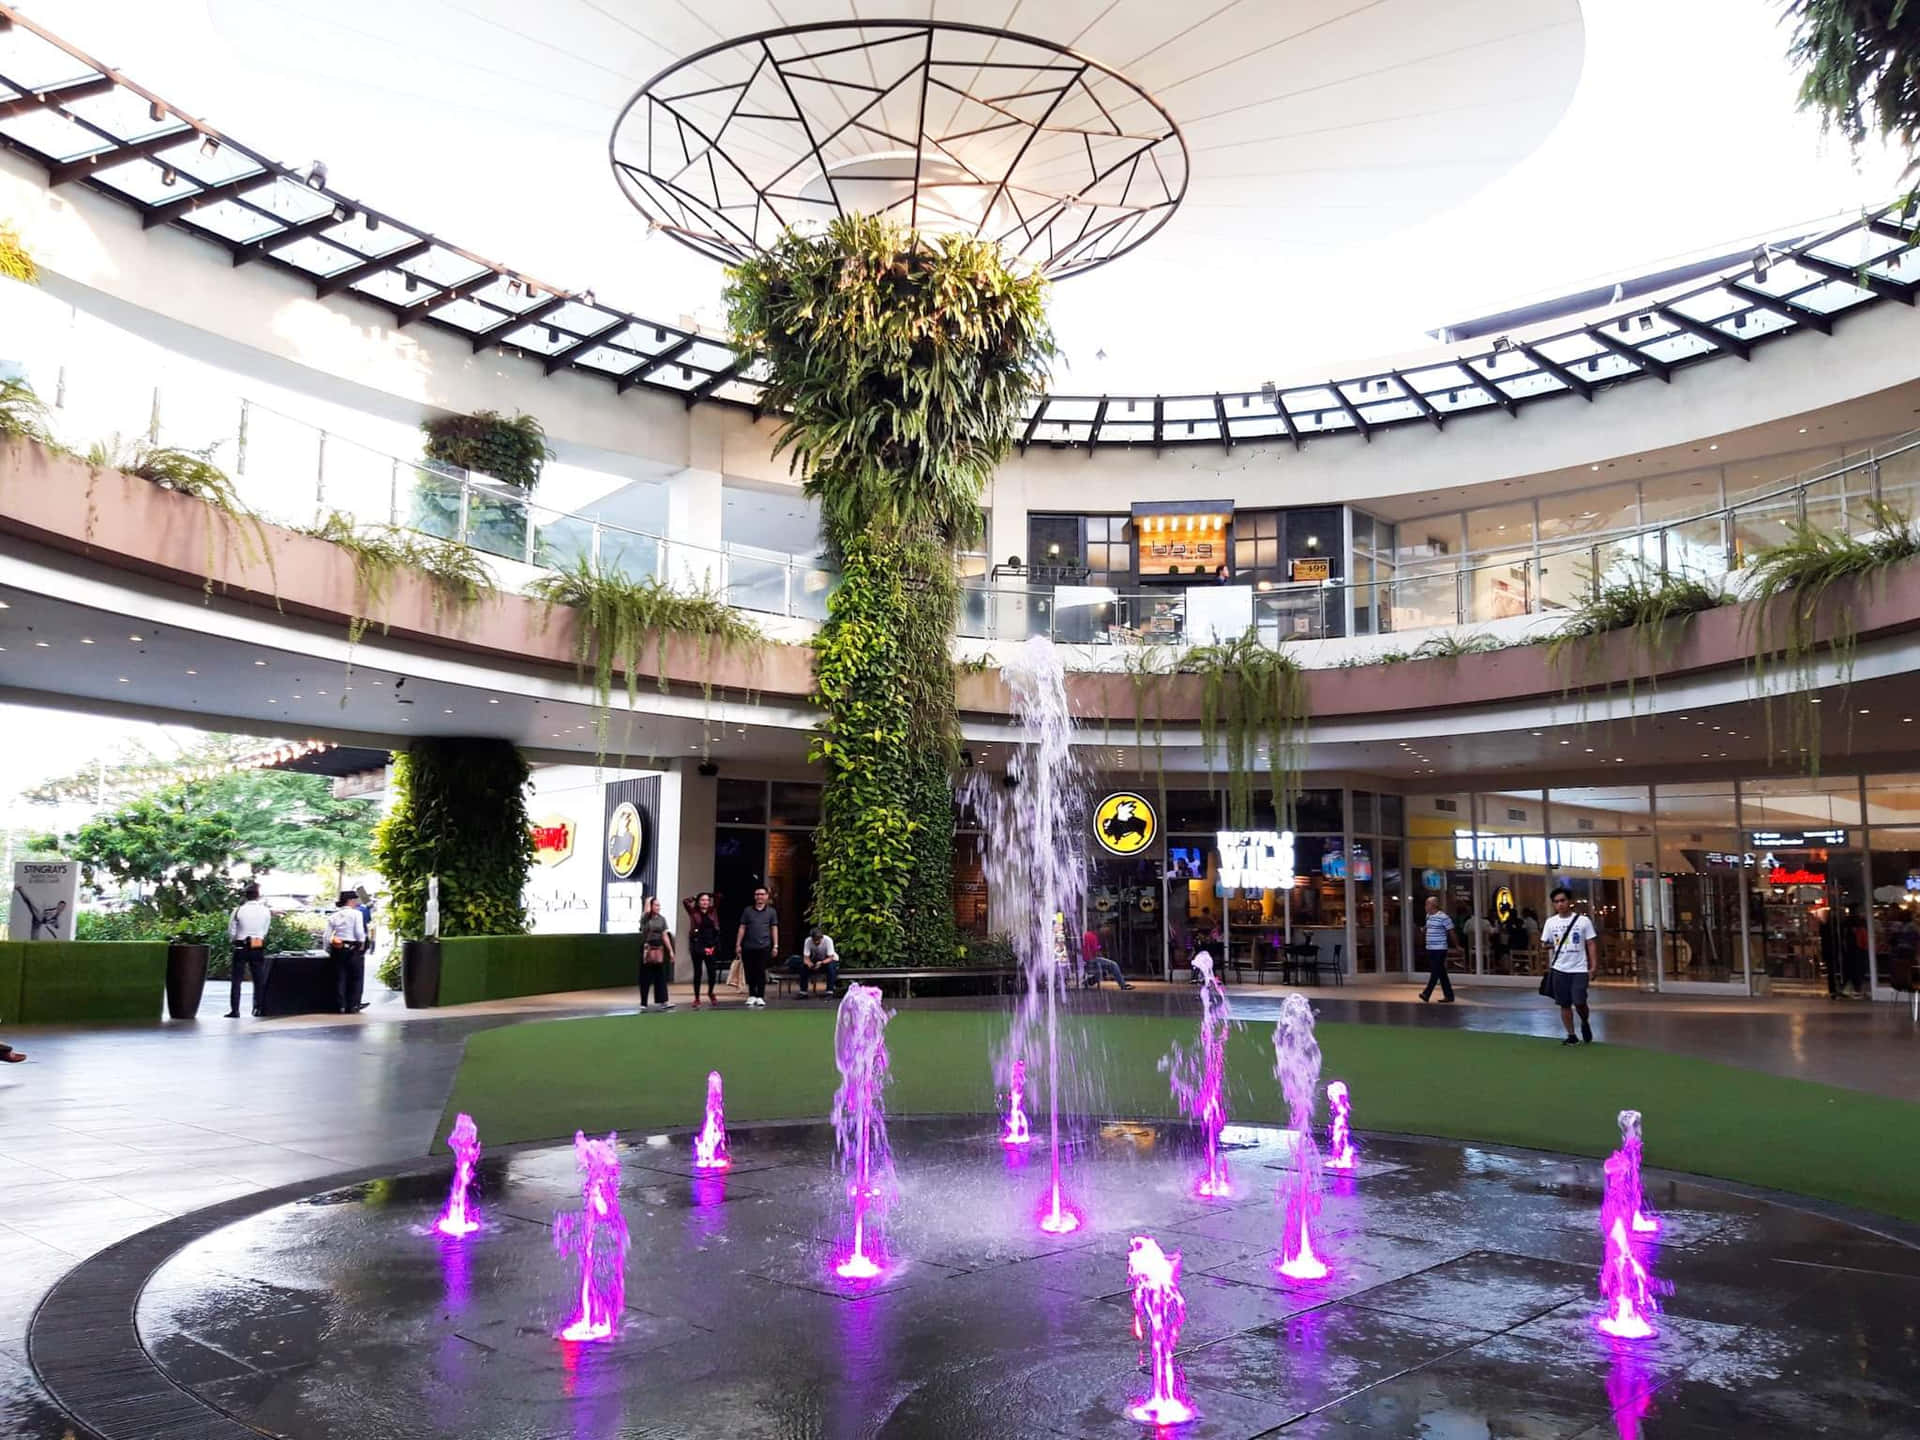 A Vibrant Shopping Mall Interior